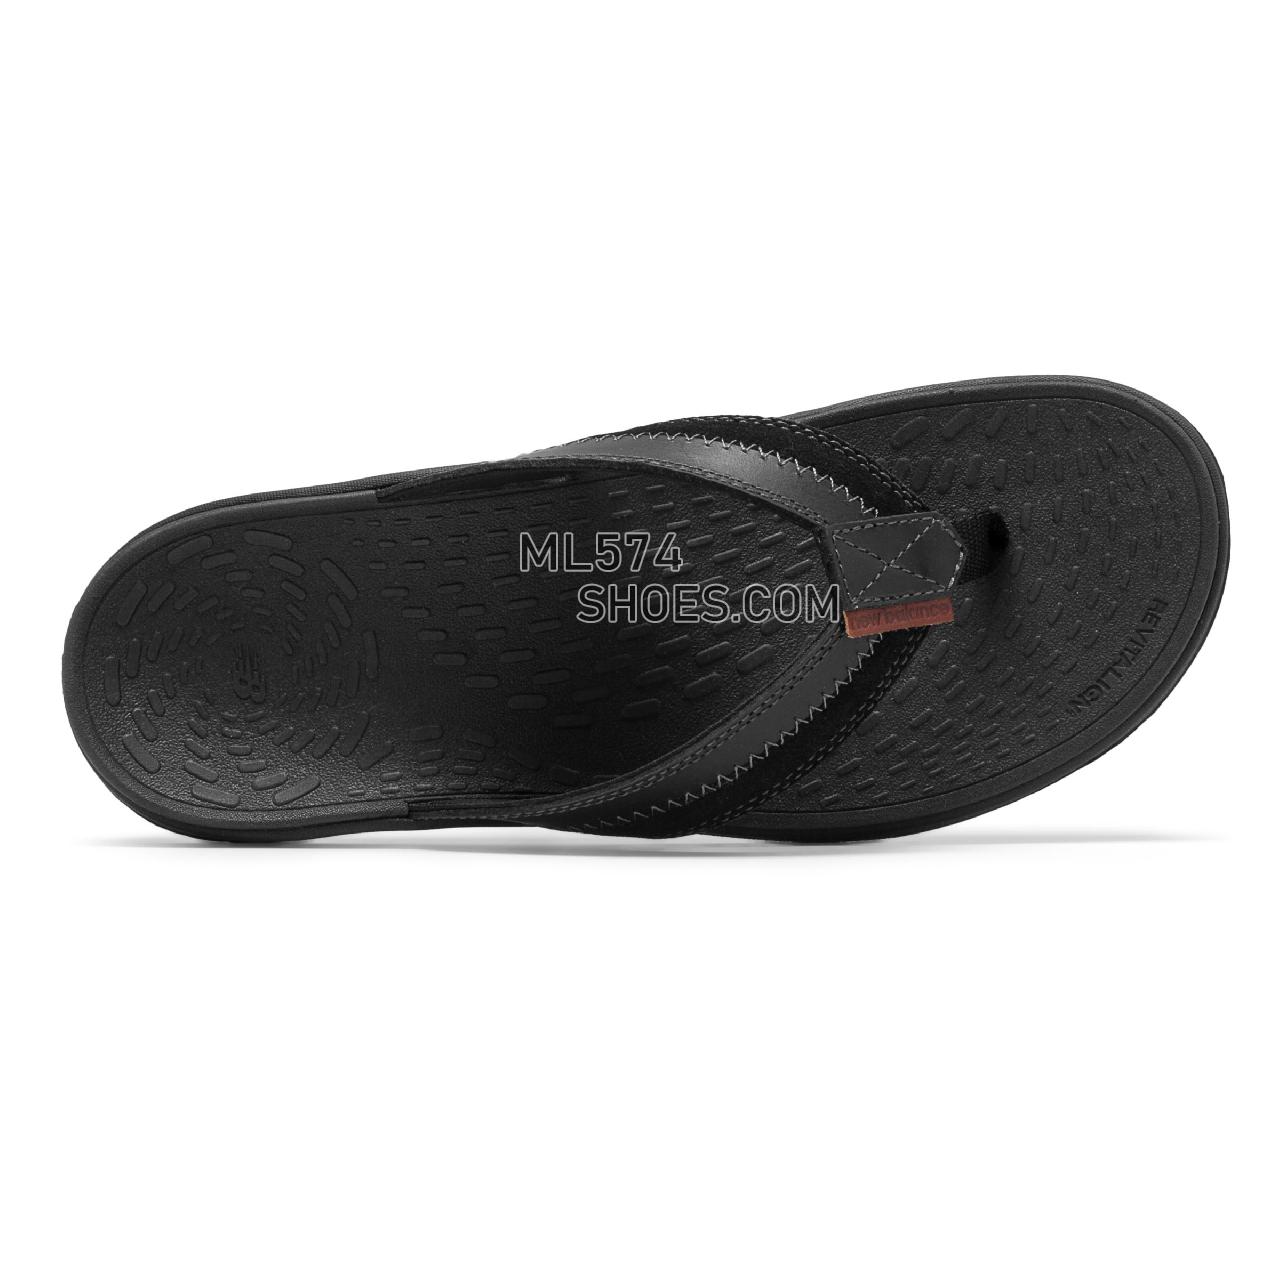 New Balance Pinnacle Flip - Men's 6100 - Sandals Black - MR6100BK